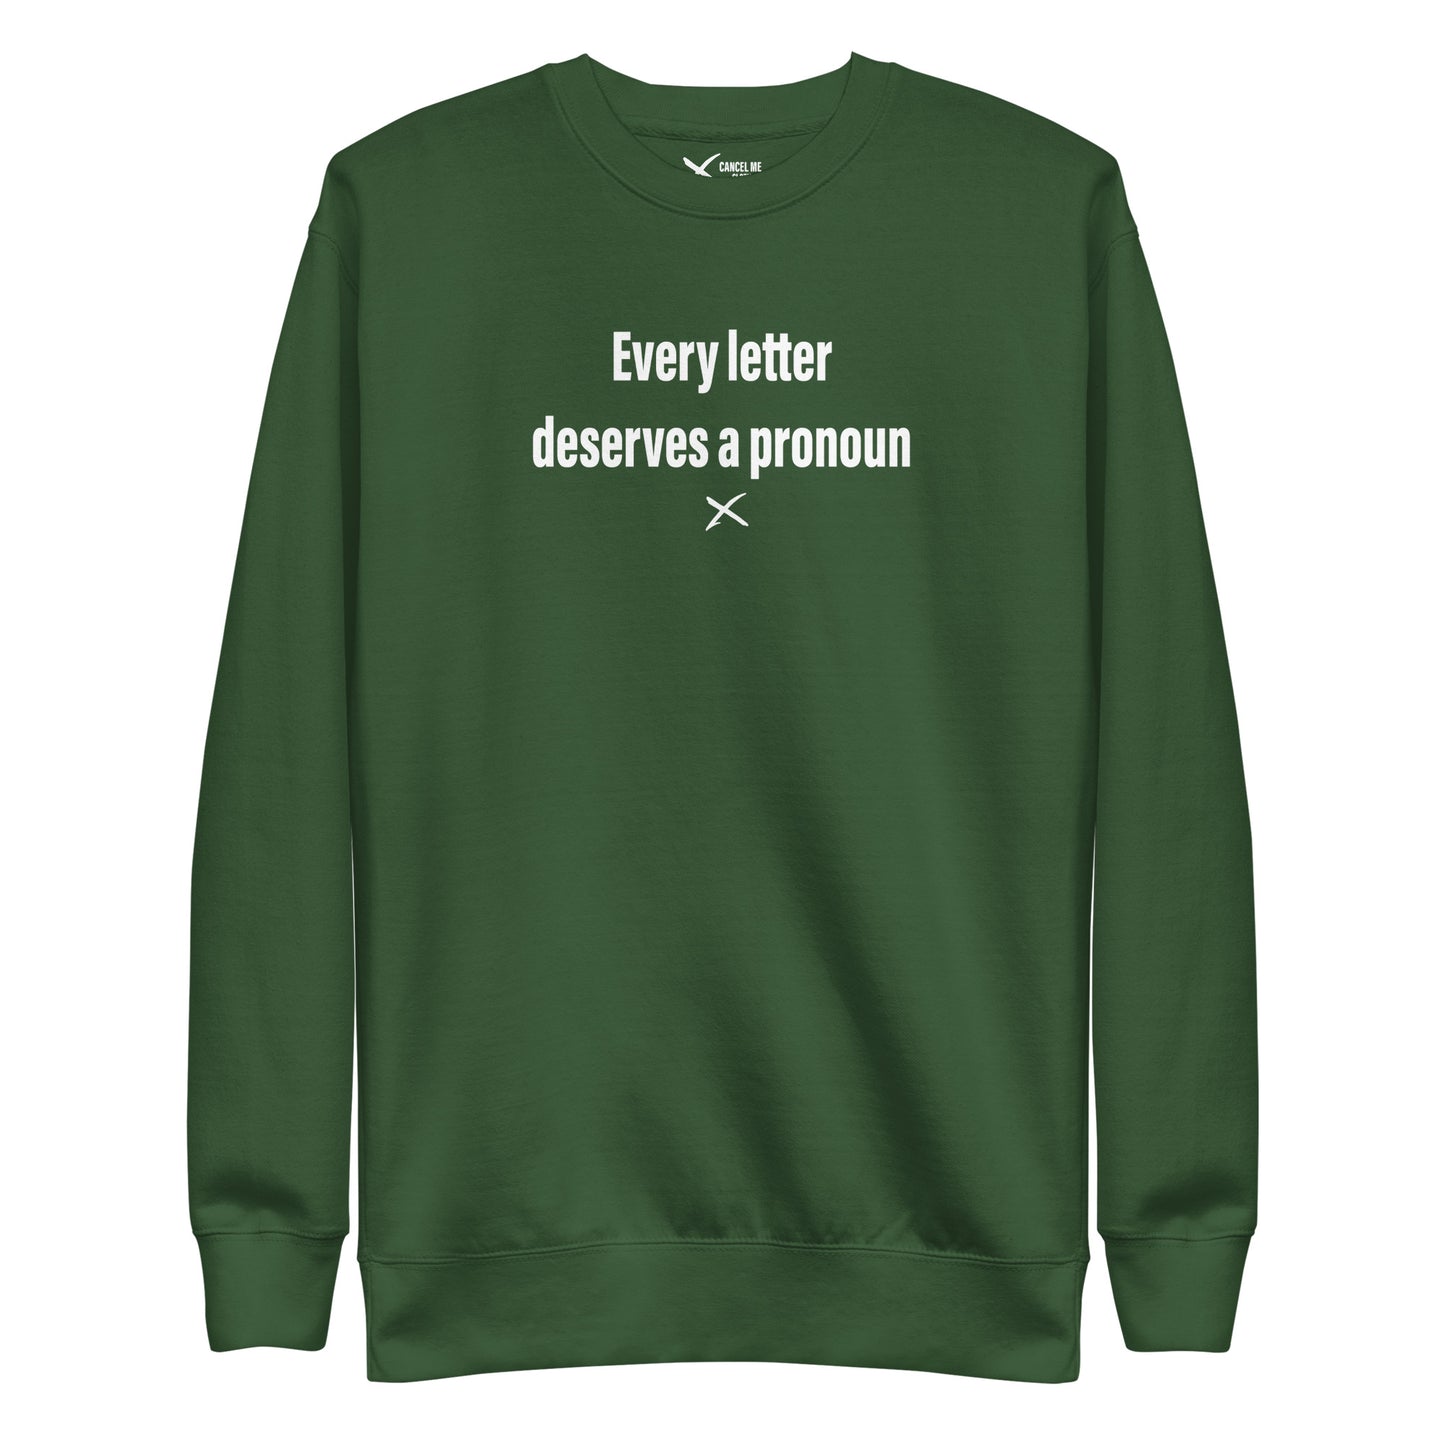 Every letter deserves a pronoun - Sweatshirt